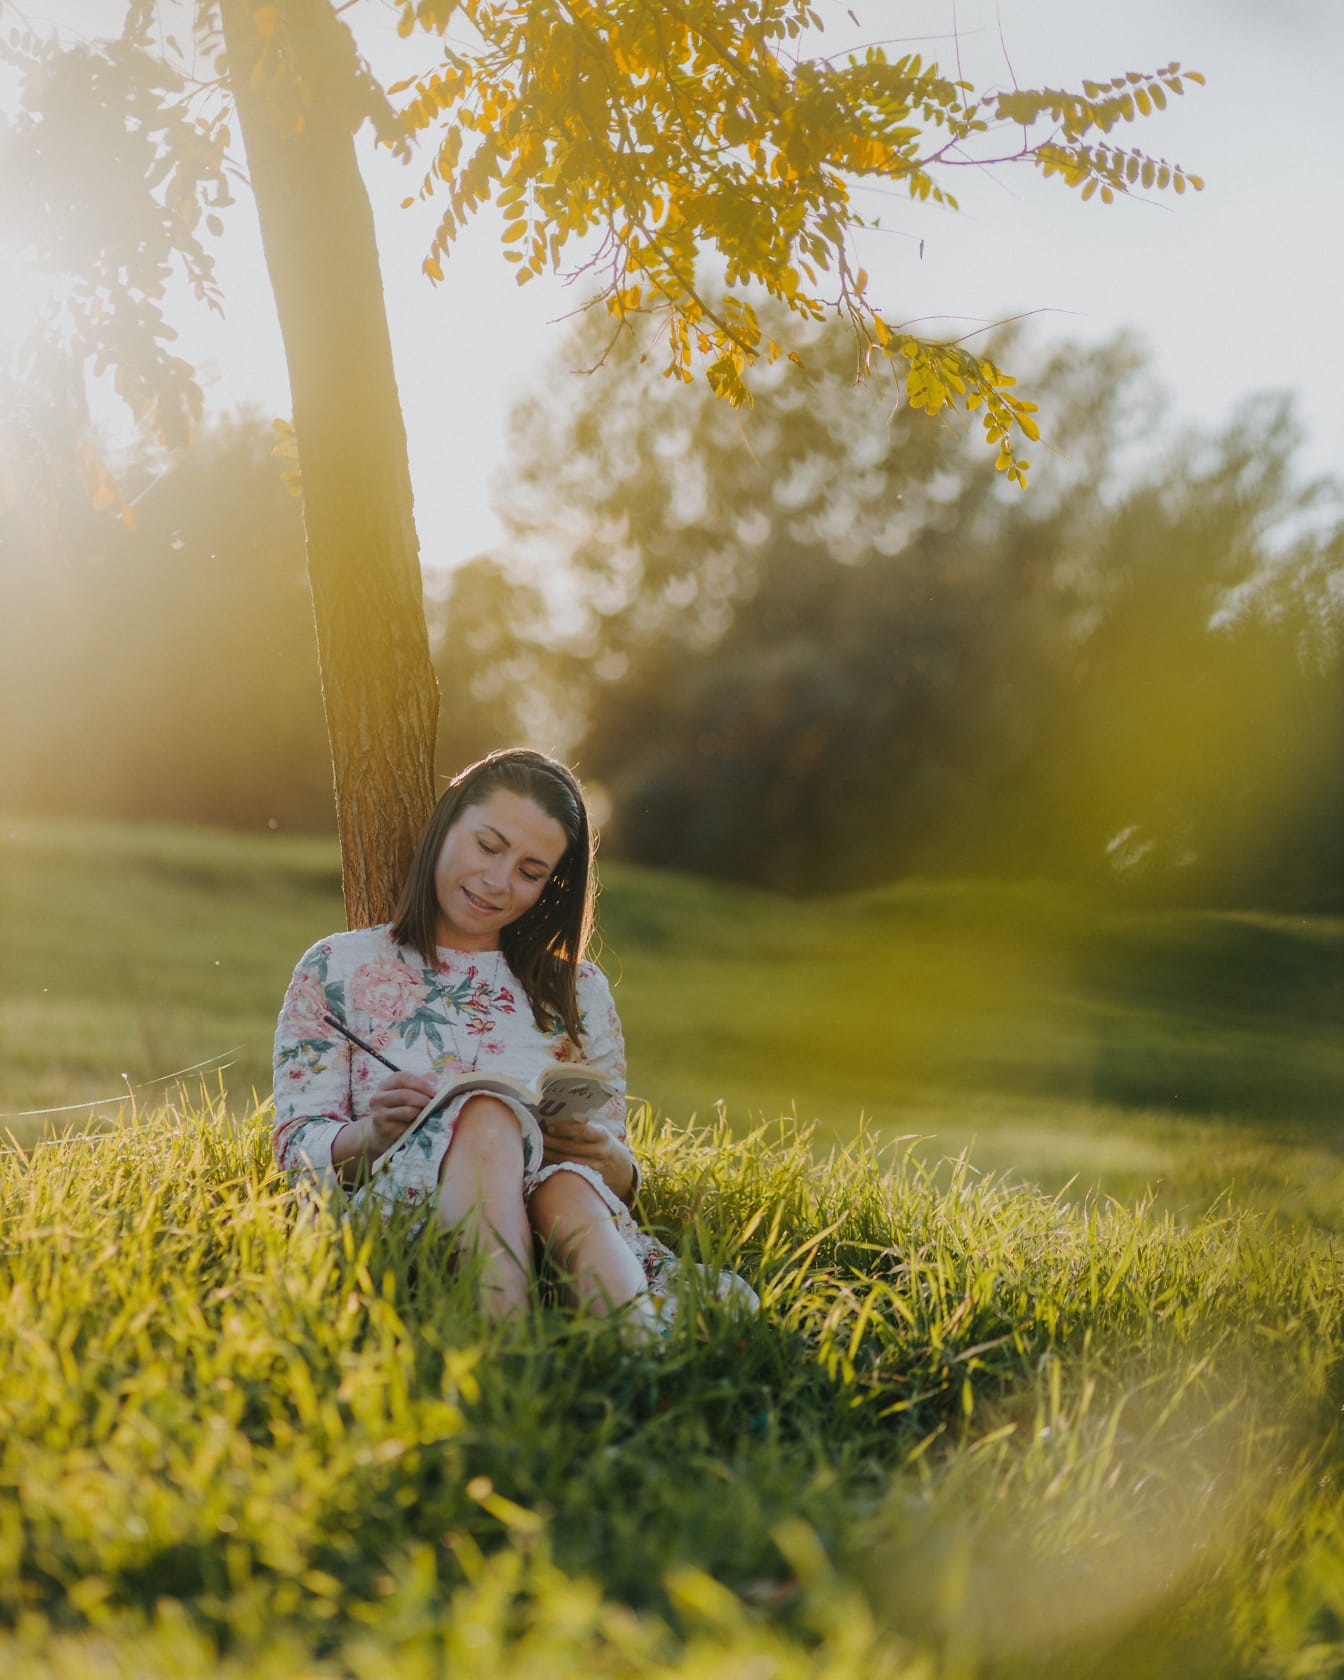 Seorang wanita tersenyum duduk di bawah pohon dan membaca buku pada hari musim panas yang cerah